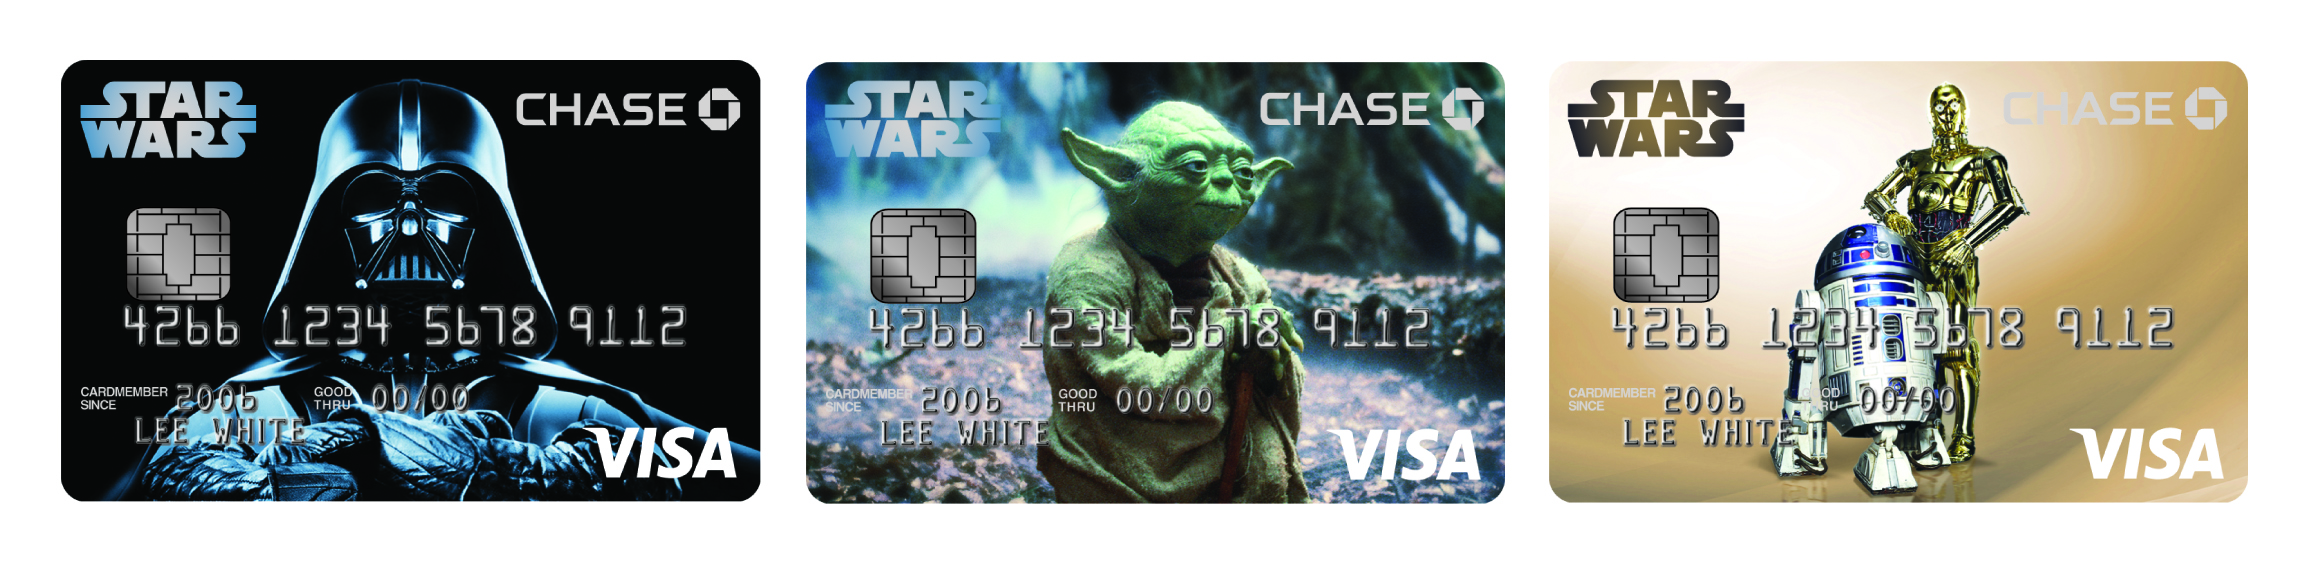 Chase Highlights Disney Visa Cardmember's Star Wars Benefits